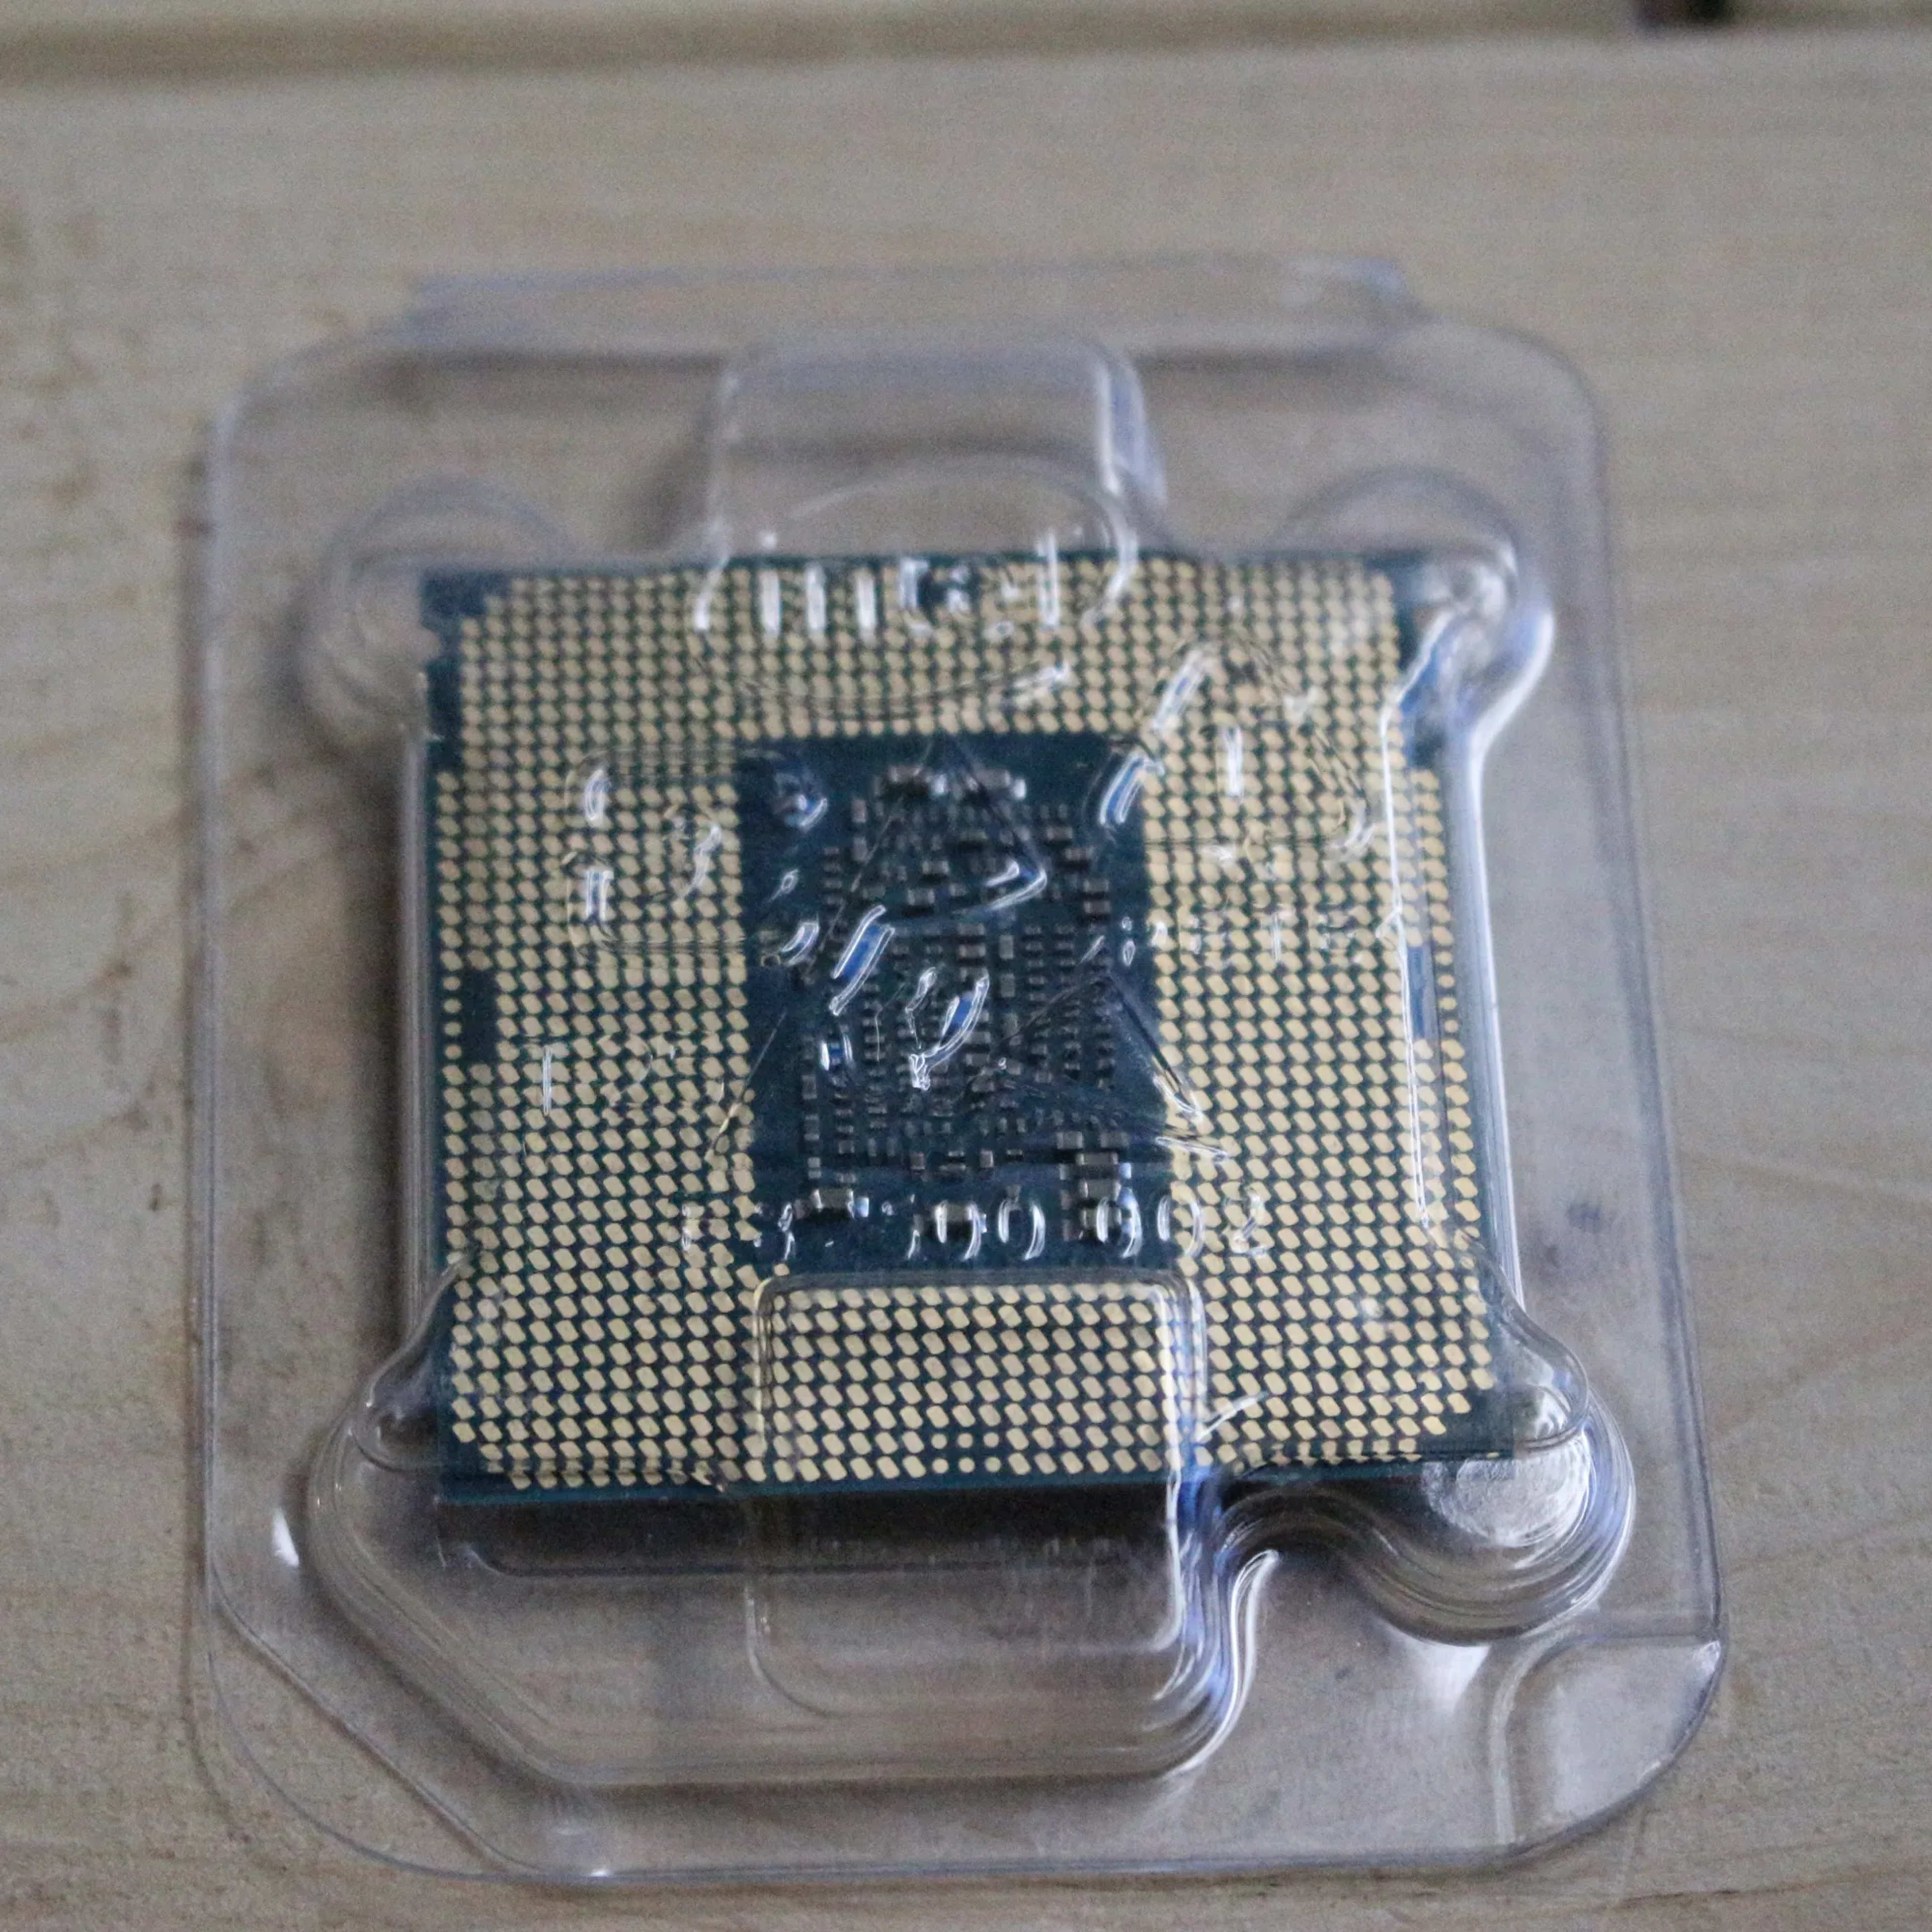 Intel Core i7-7700K | 4 Cores 8 Threads @4.20GHz | Jawa